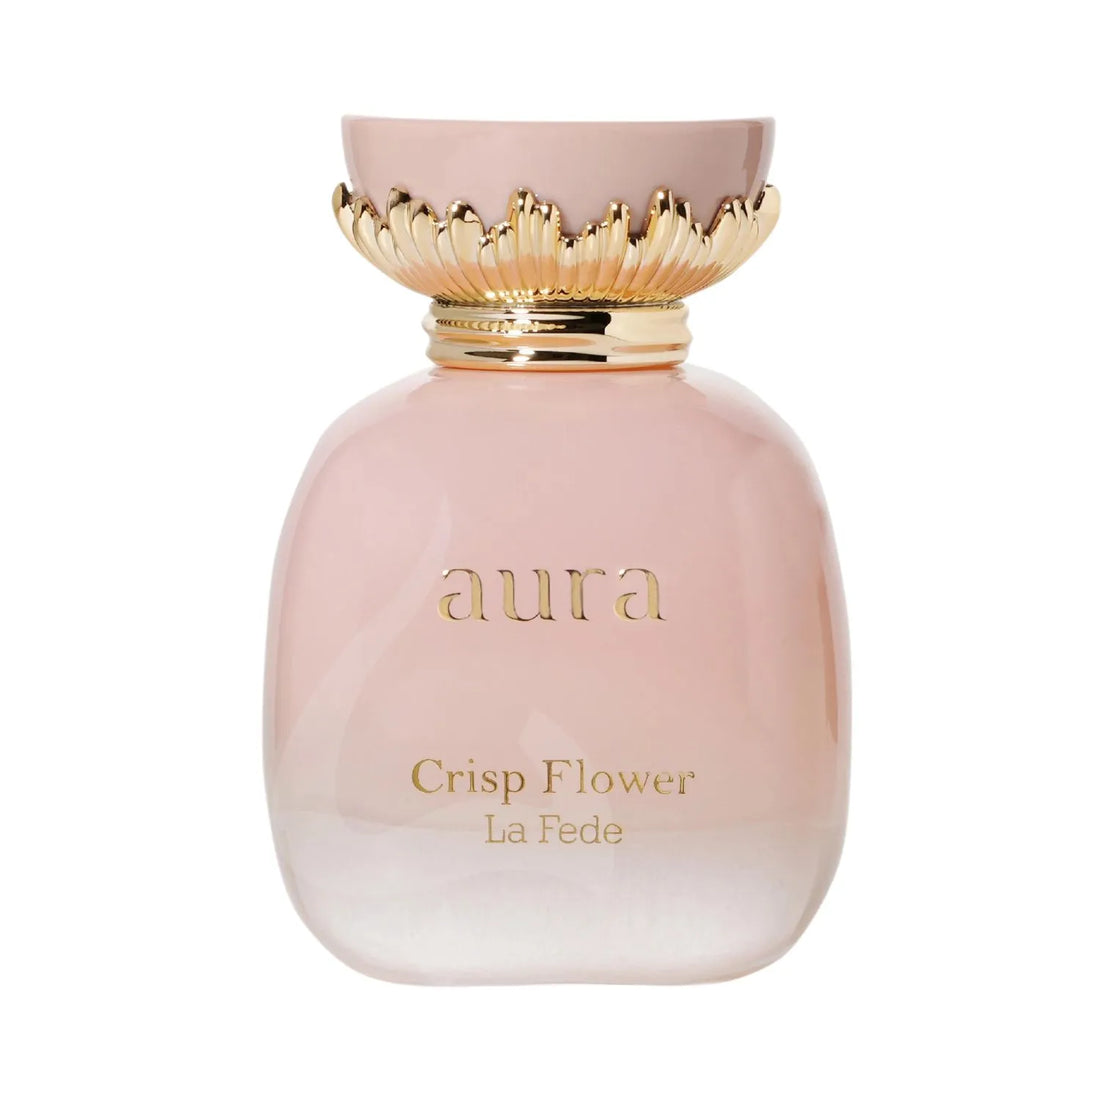 La Fede Aura Crisp Flower Perfume Bottle